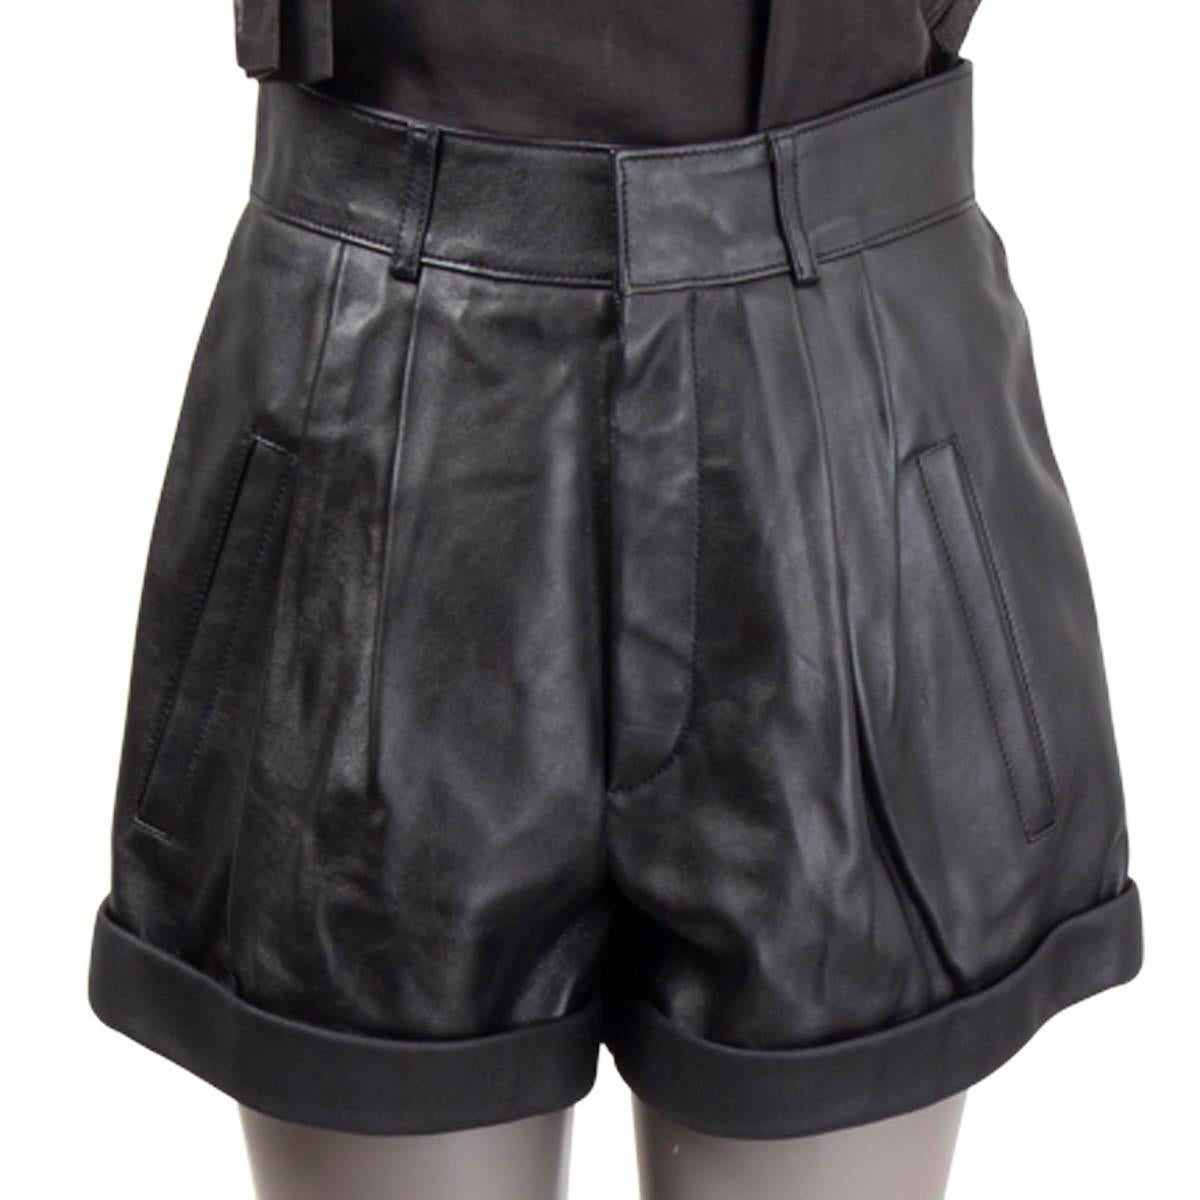 Black SAINT LAURENT black leather HIGH WAISTED Shorts Pants 38 S